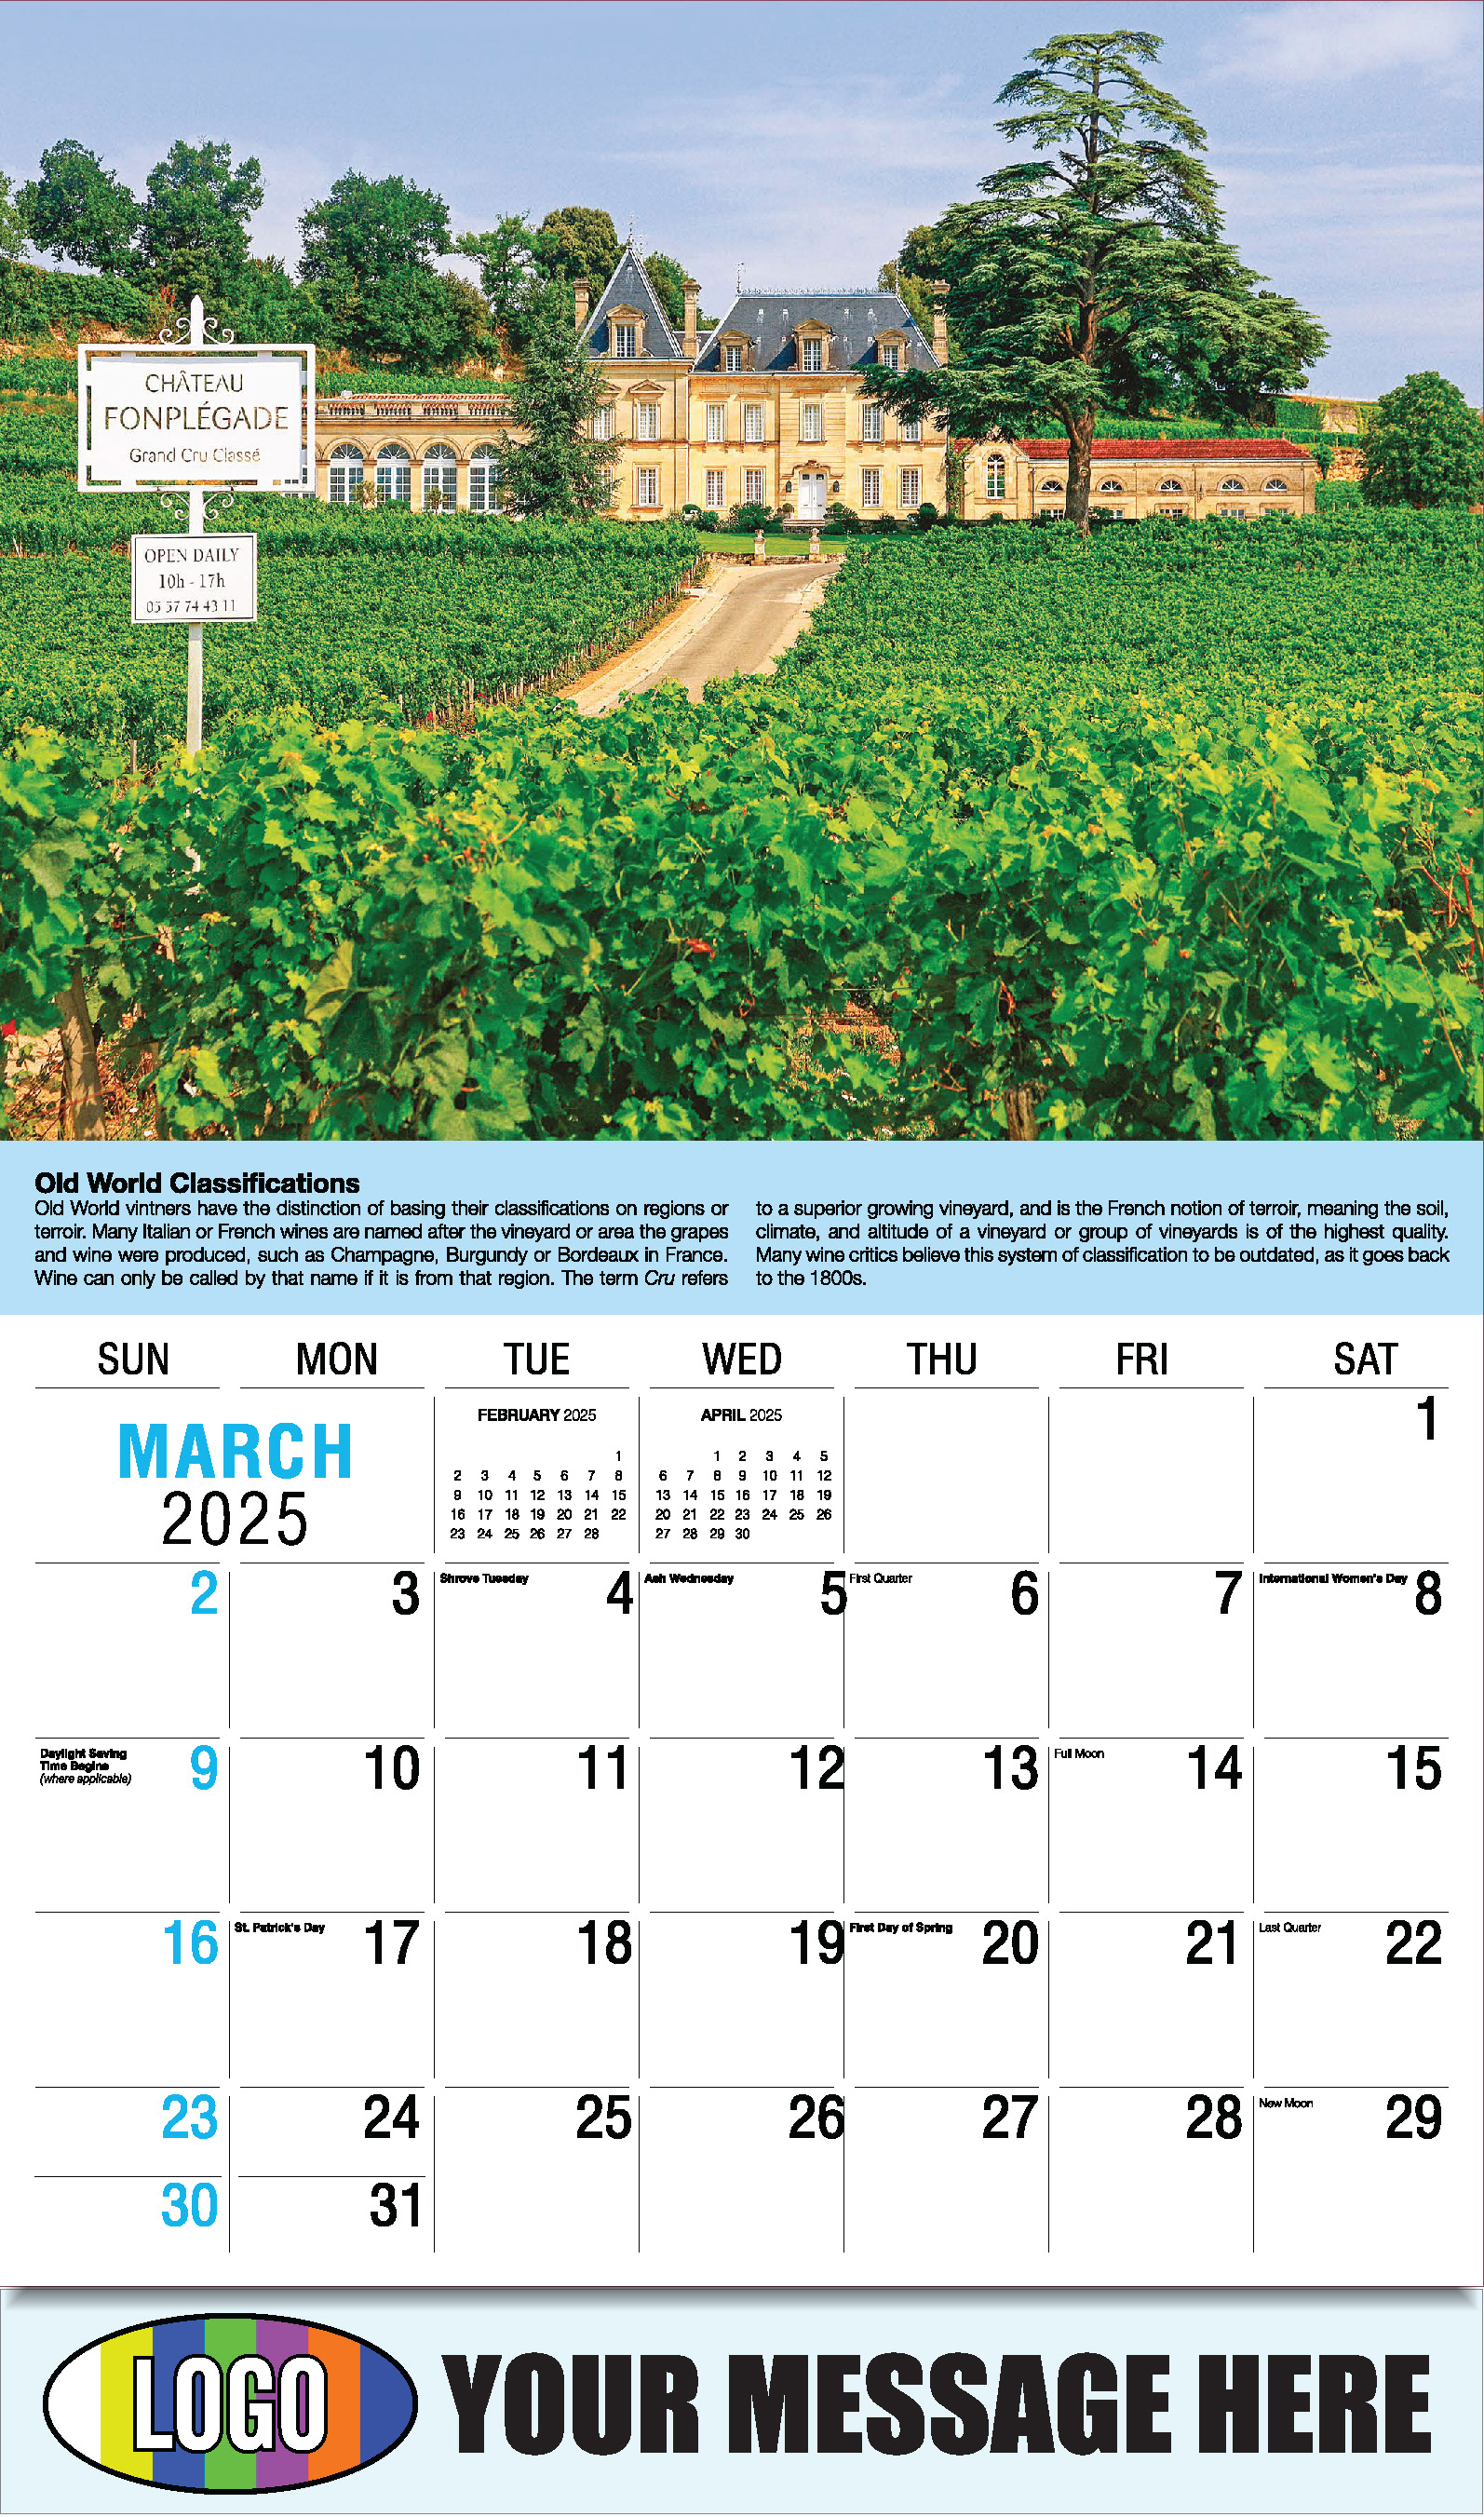 Vintages - Wine Tips 2025 Business Promo Calendar - March